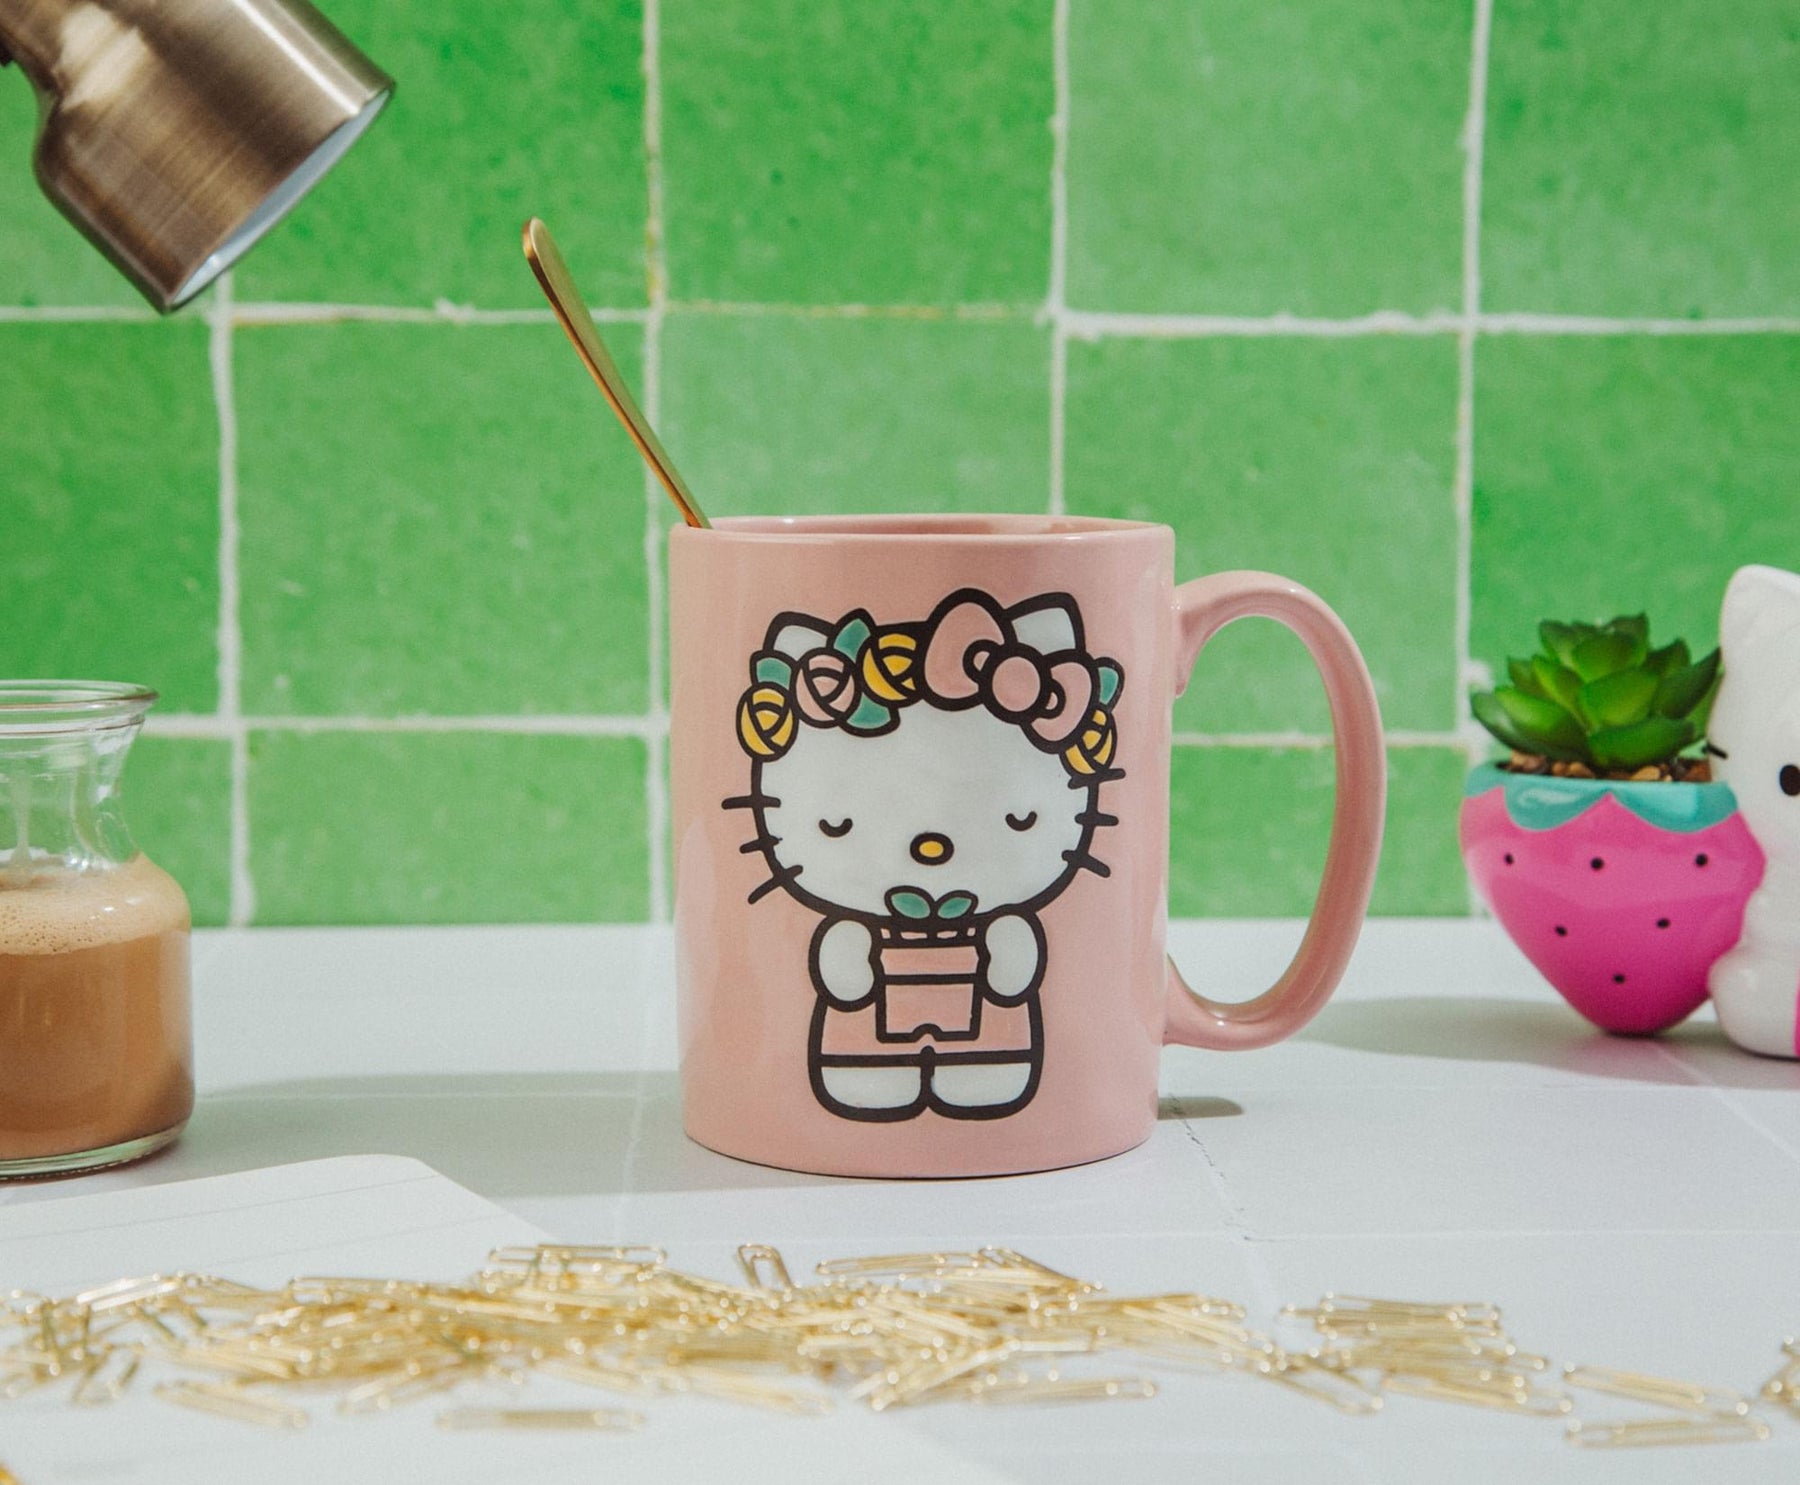 Sanrio Hello Kitty Flower Badge Wax Resist Ceramic Pottery Mug | Holds 18 Ounces